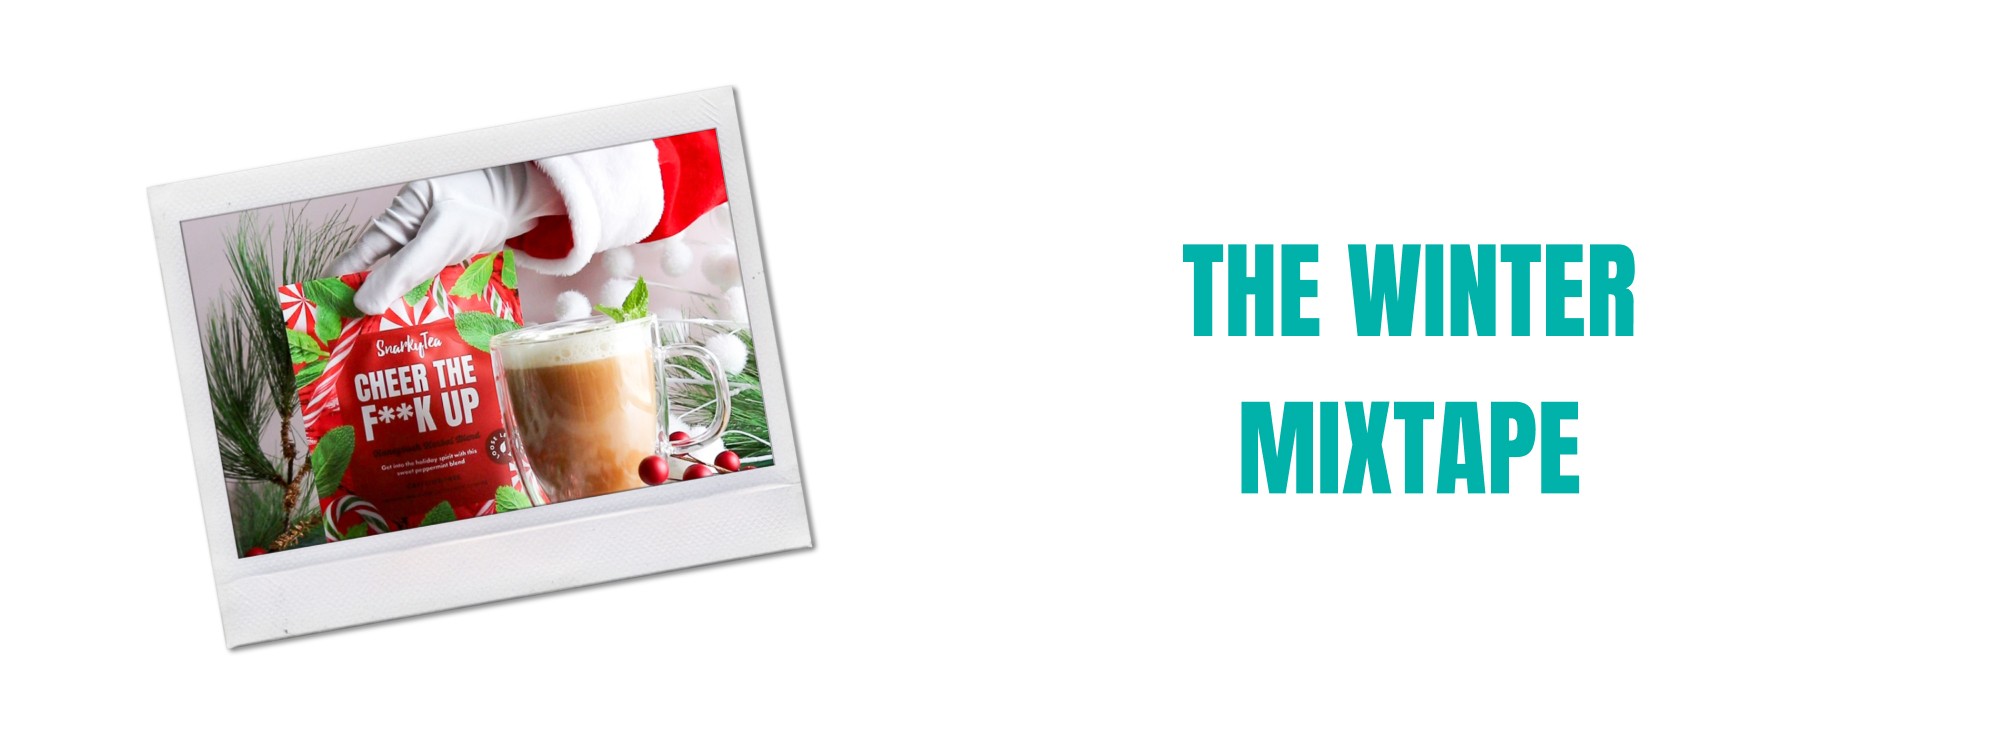 Winter Mixtape: Tea Mixes for Snowy Days & Holidays